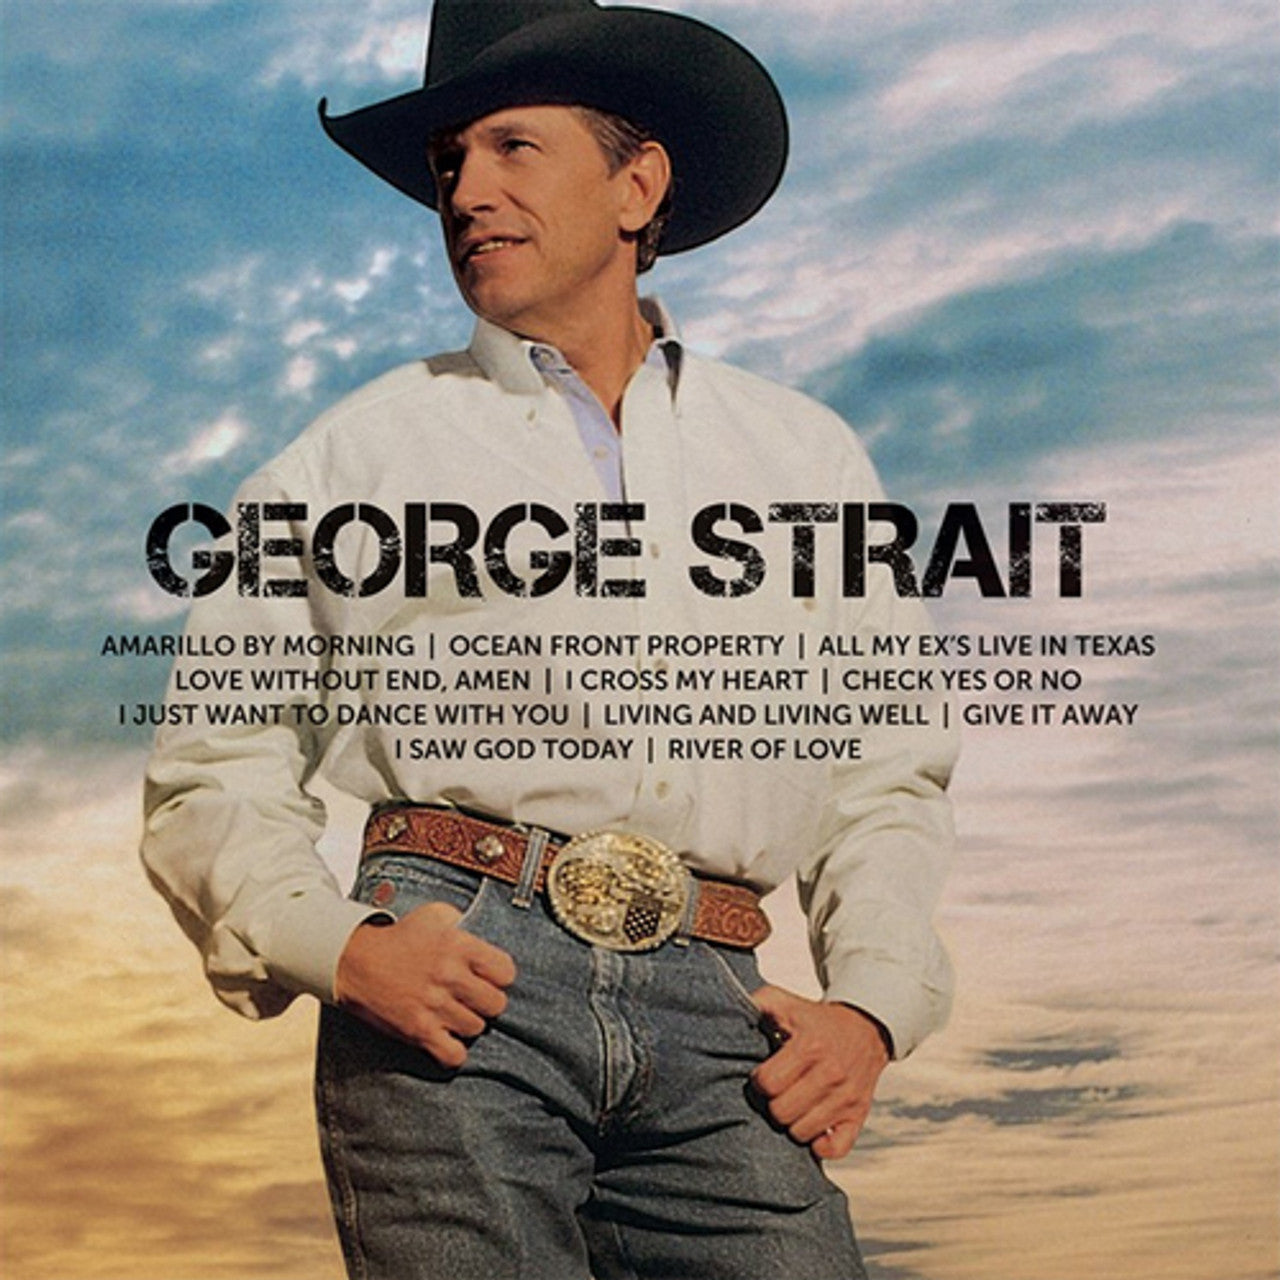 Strait, George "Icon"